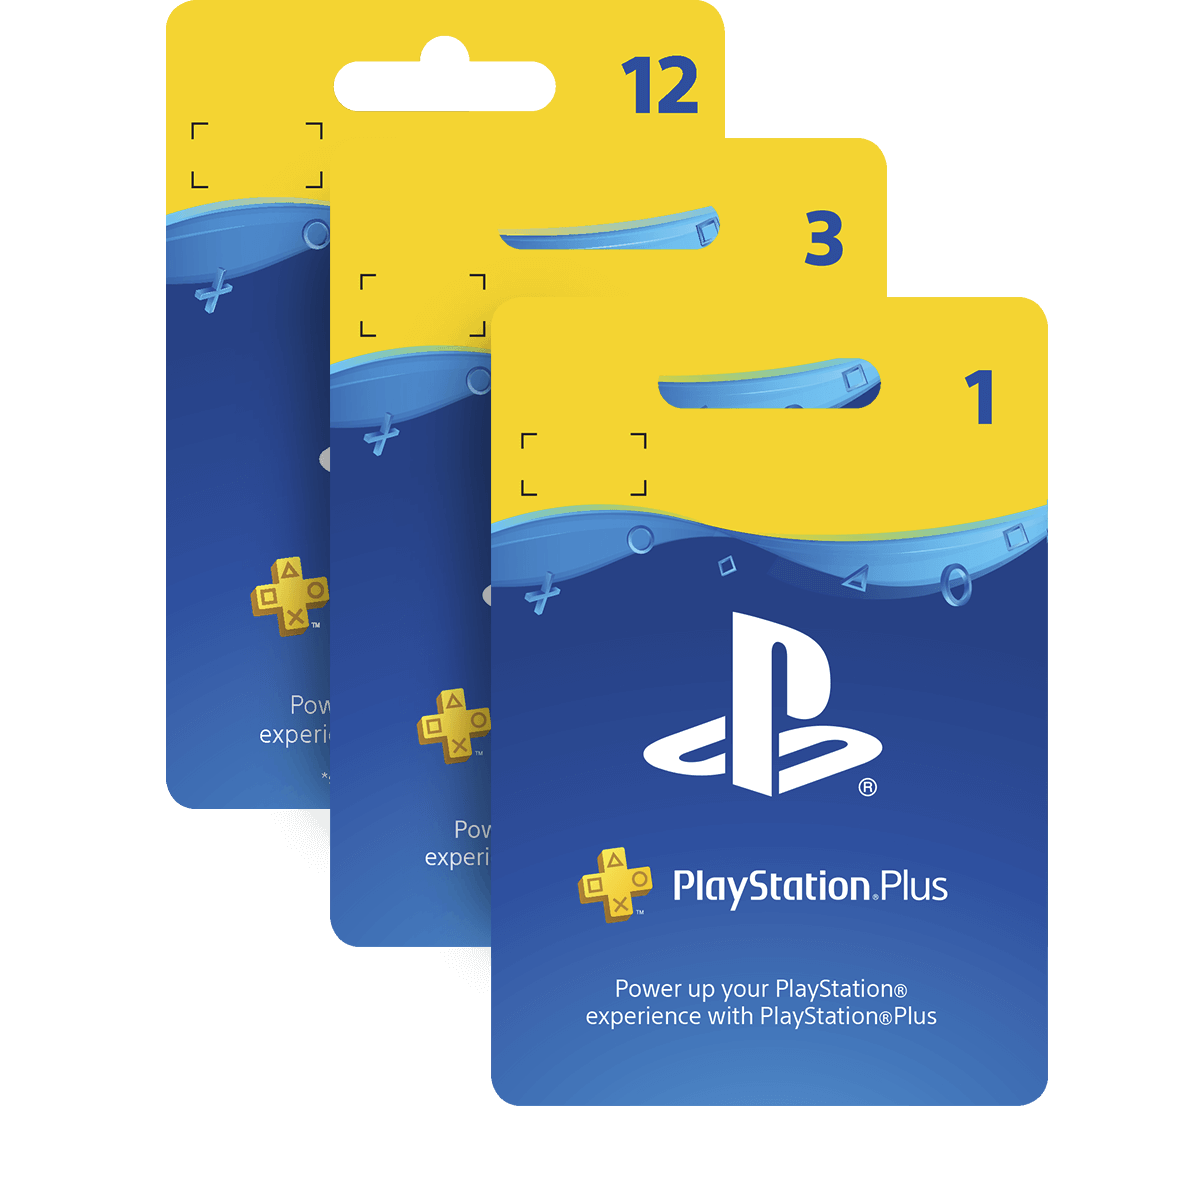 PlayStation Plus price online Nigeria. Buy ps plus in Nigeria